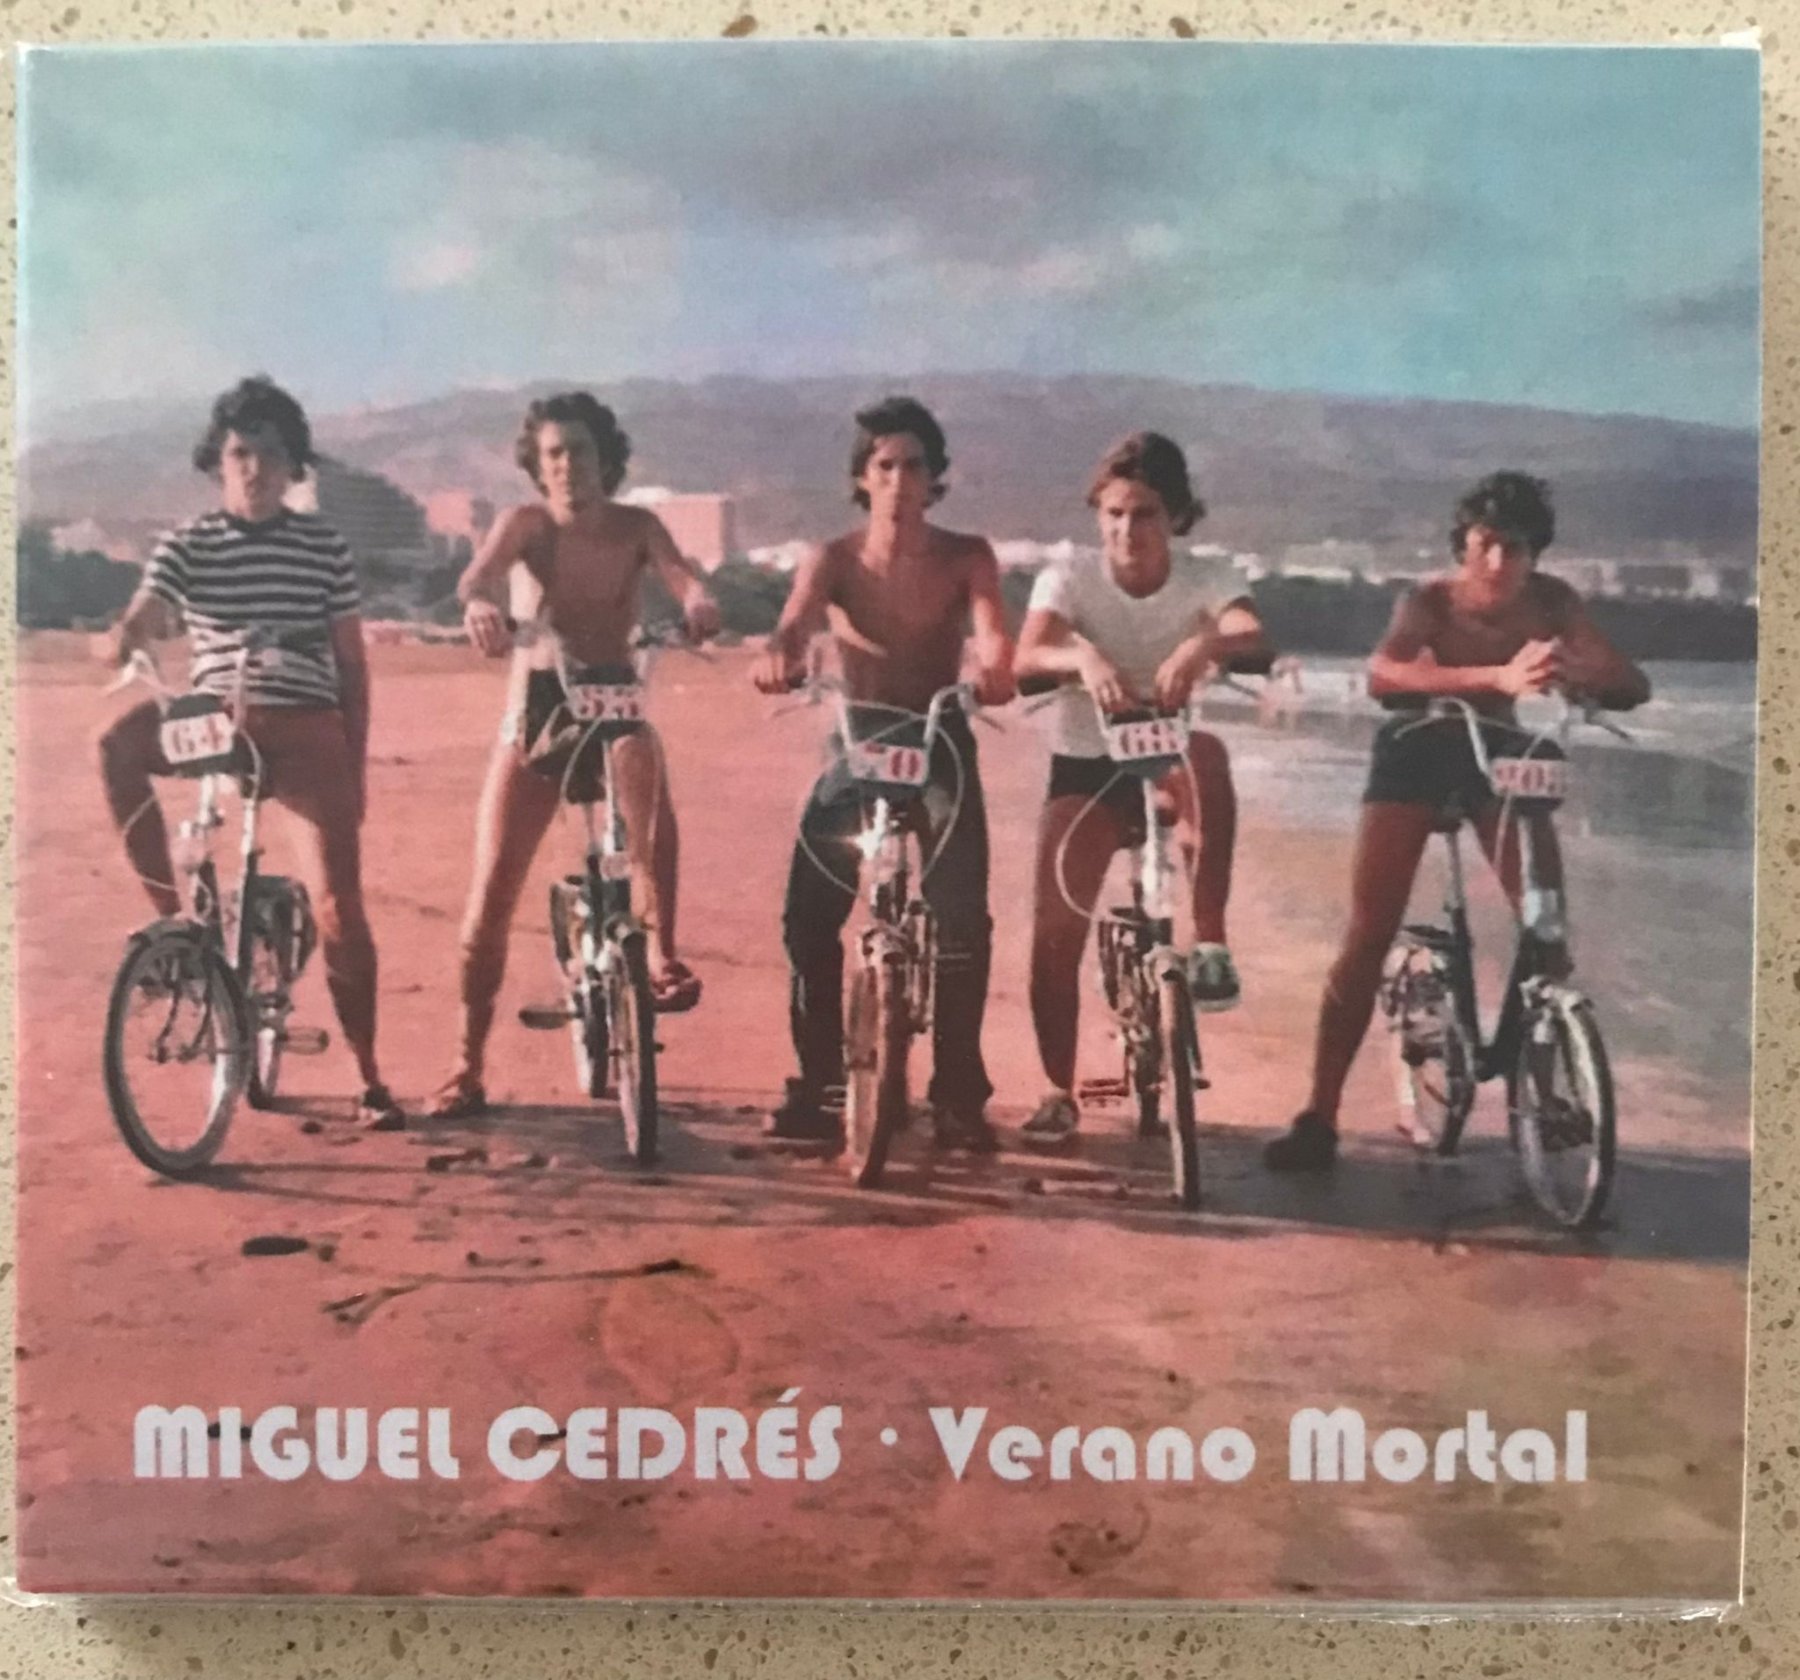 Miguel Cedrés "Verano Mortal" CD